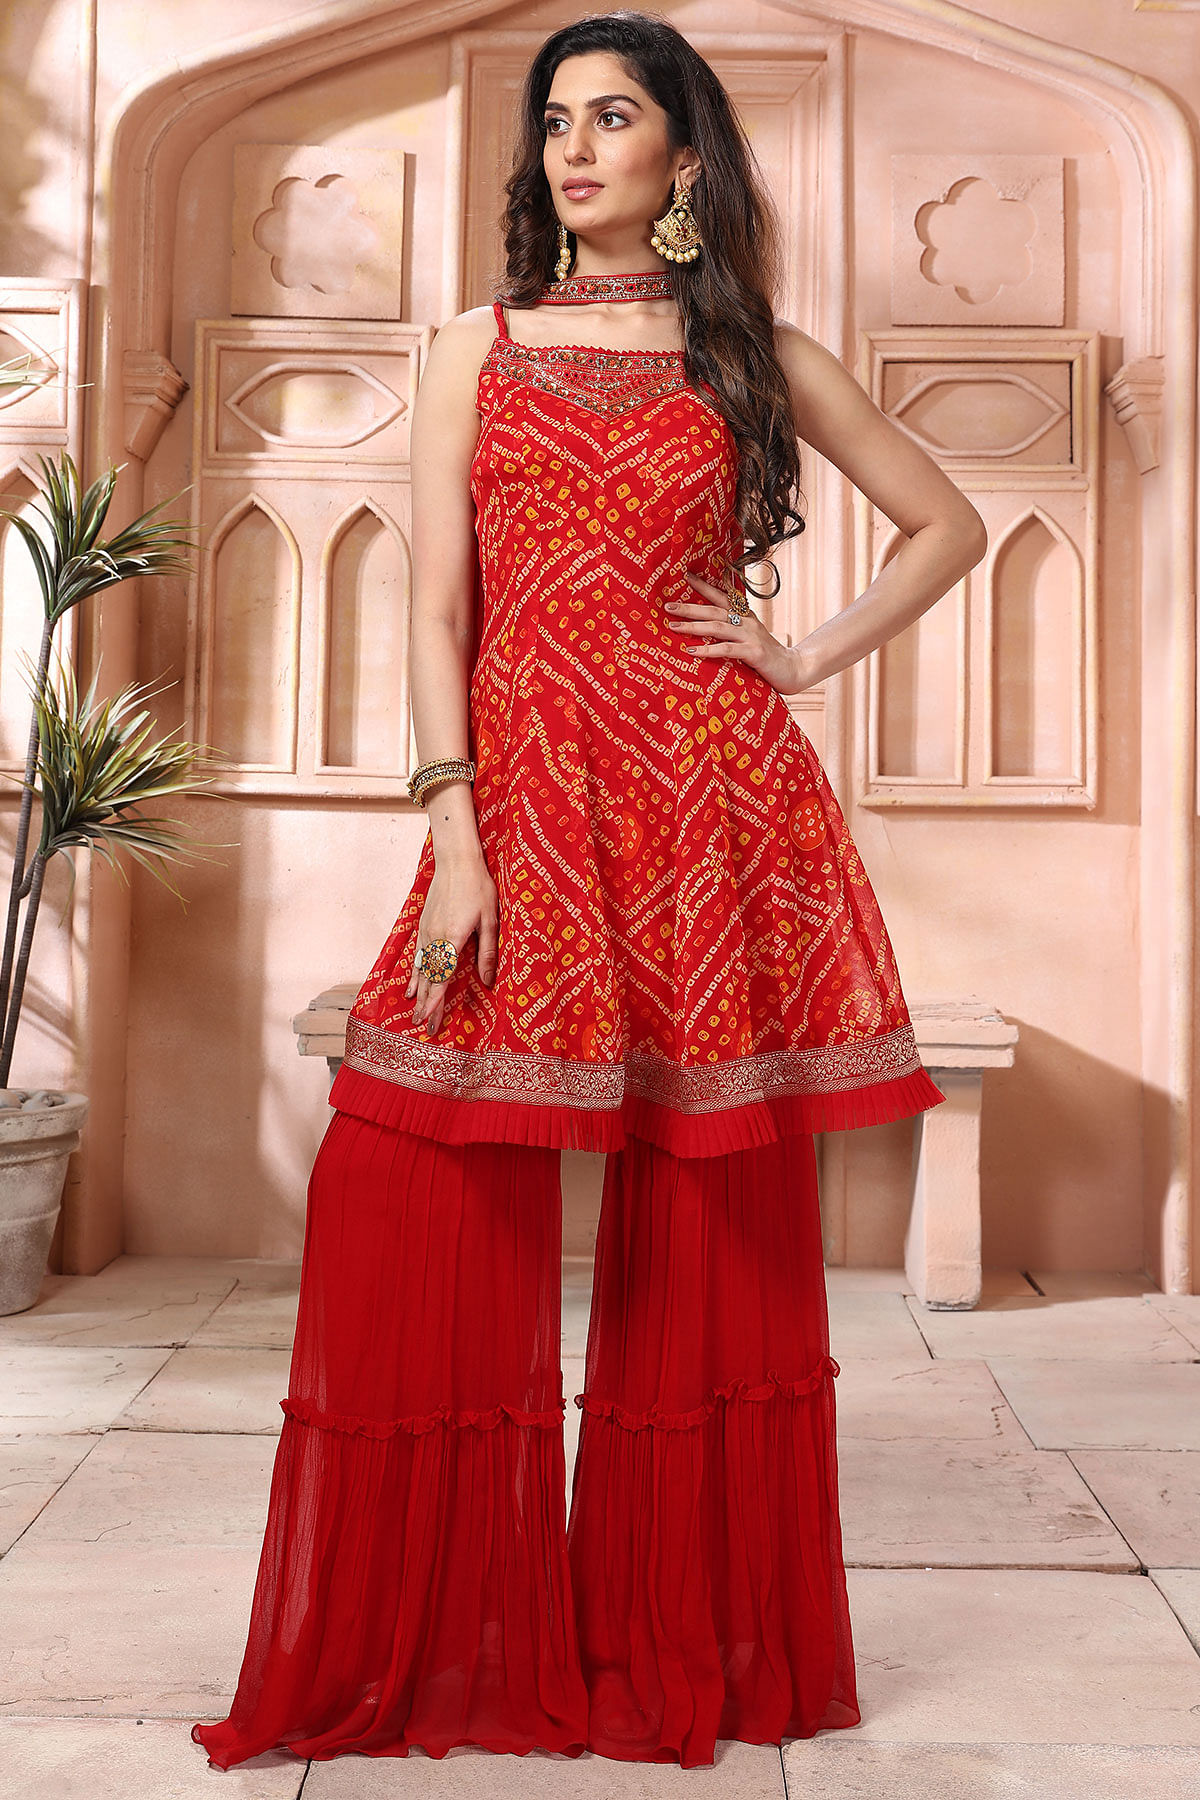 Deepika Padukone's Bandhani Kurta Could Be Your Next Wedding Guest Look |  Femina.in